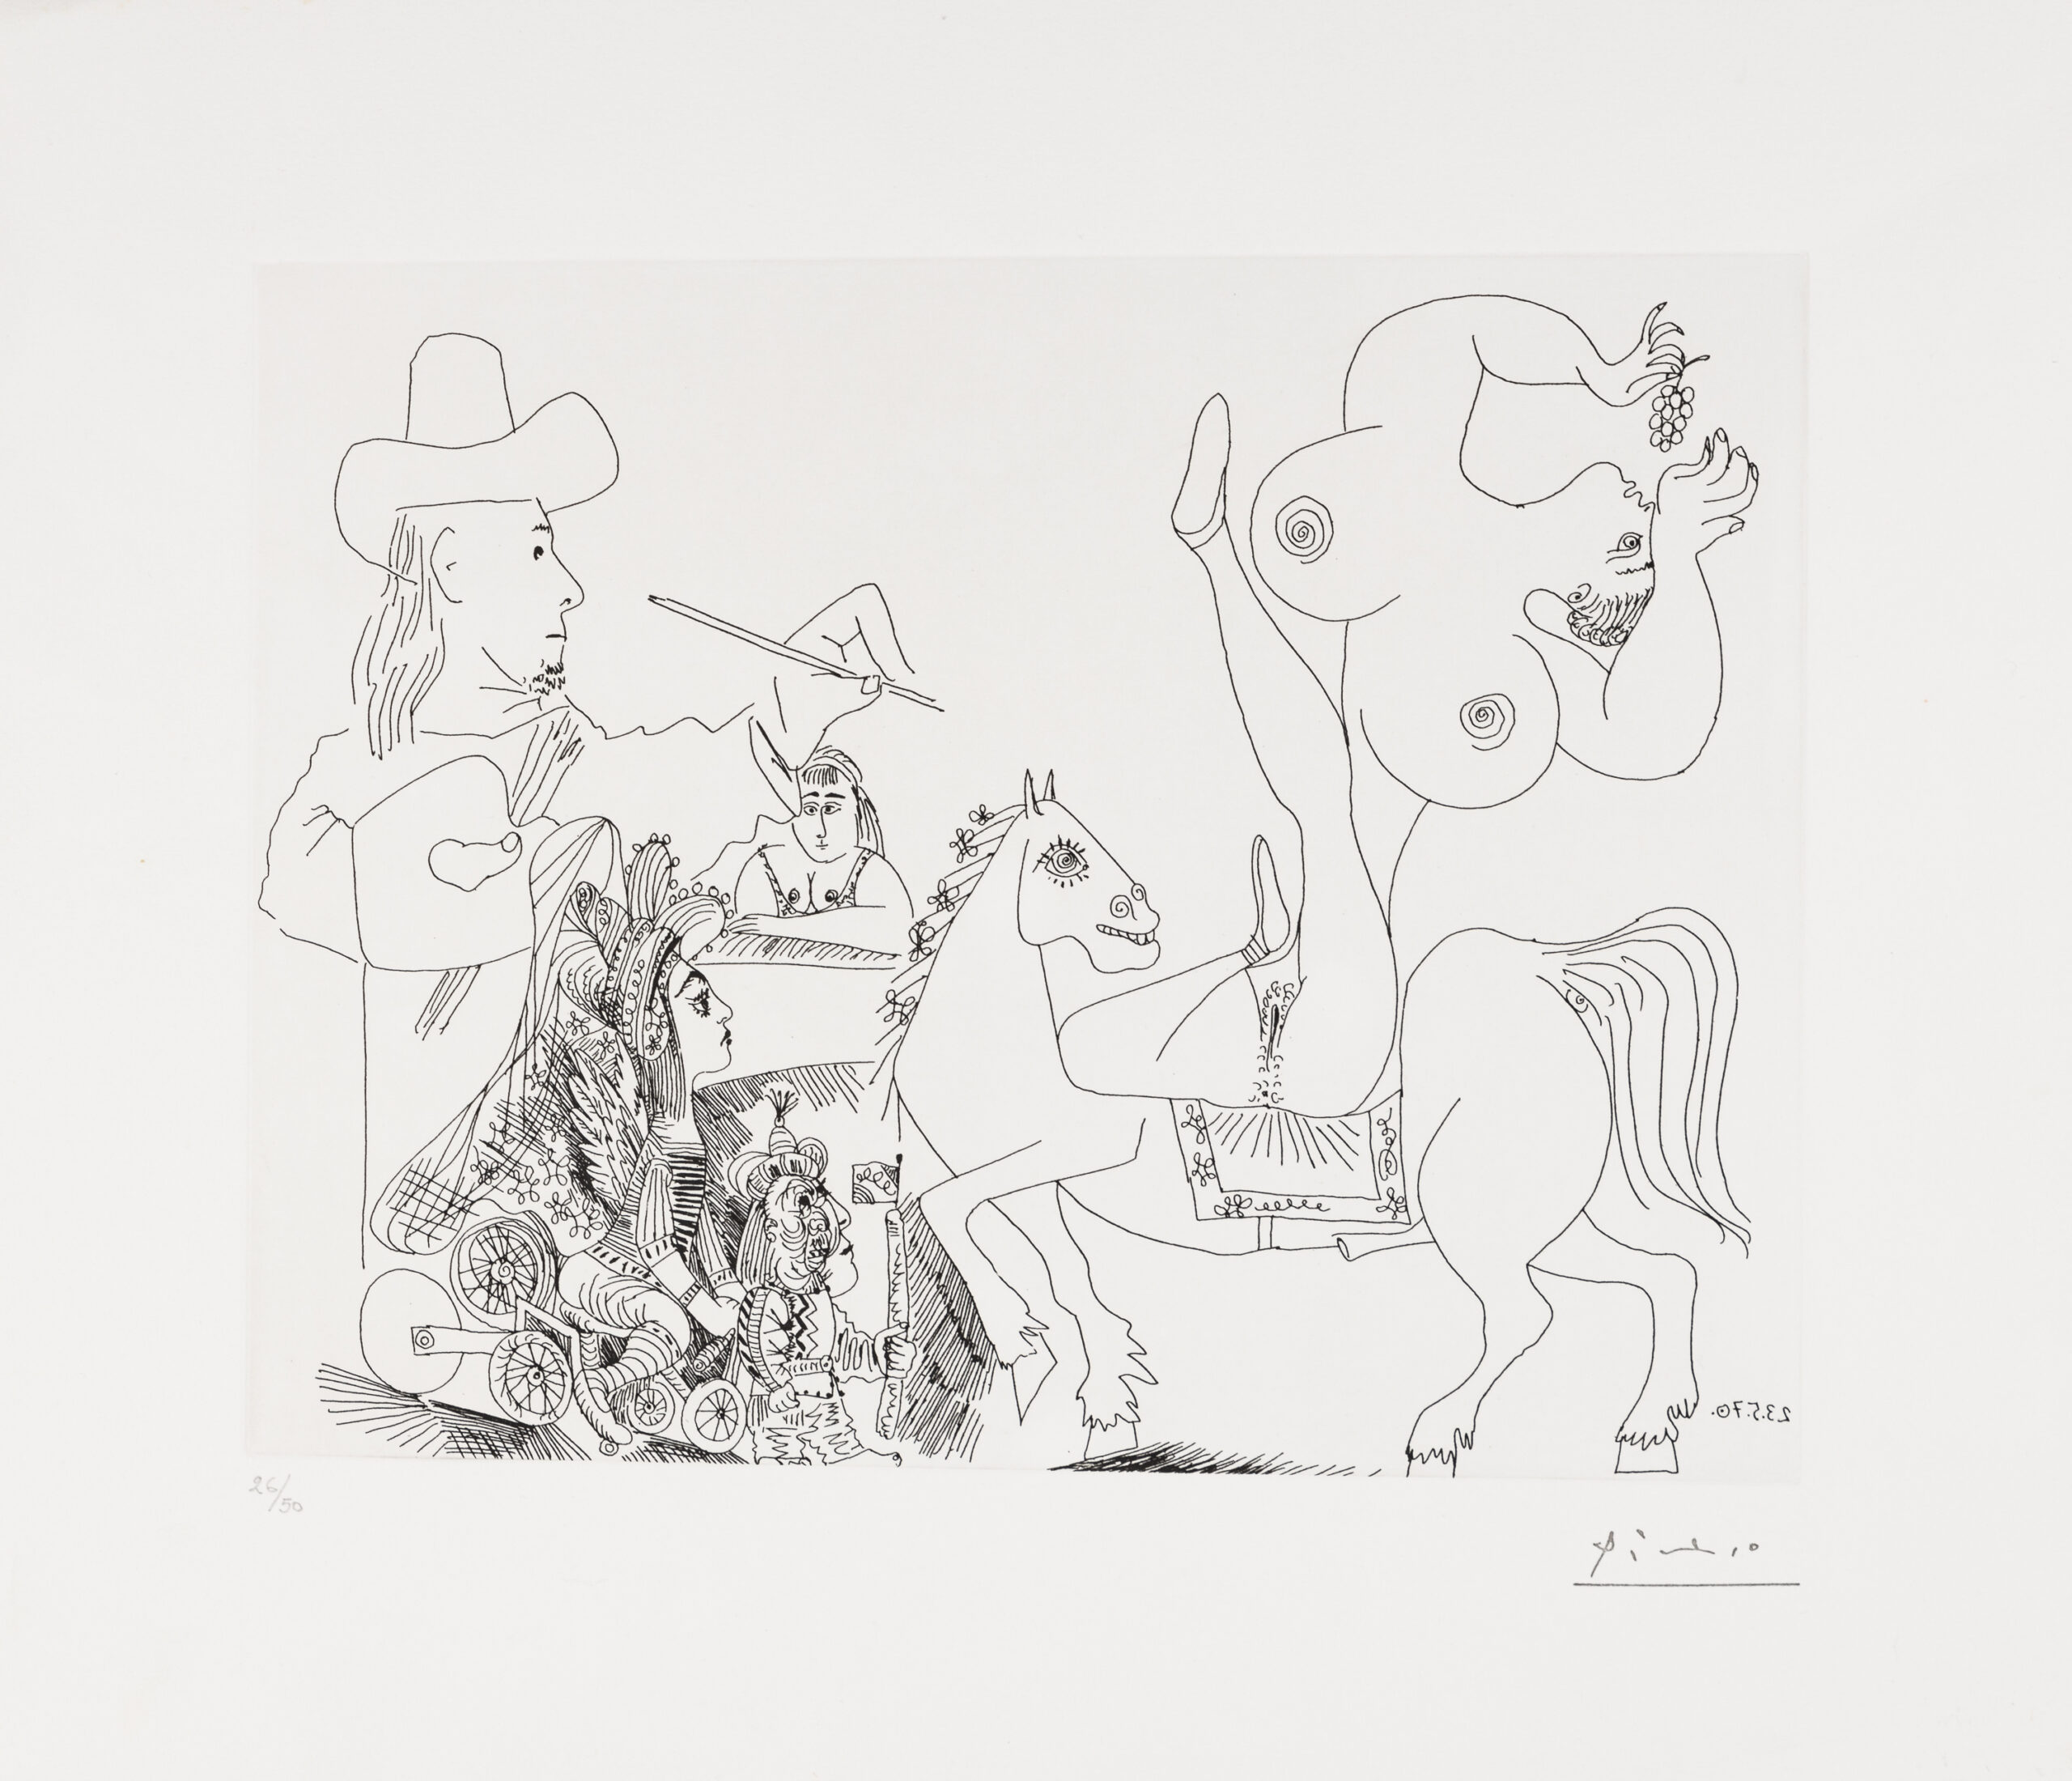 Pablo Picasso, Le peintre au cirque, 1970, drypoint, 18,5 x 16,3 in, Pl.55 from the Suite 156
